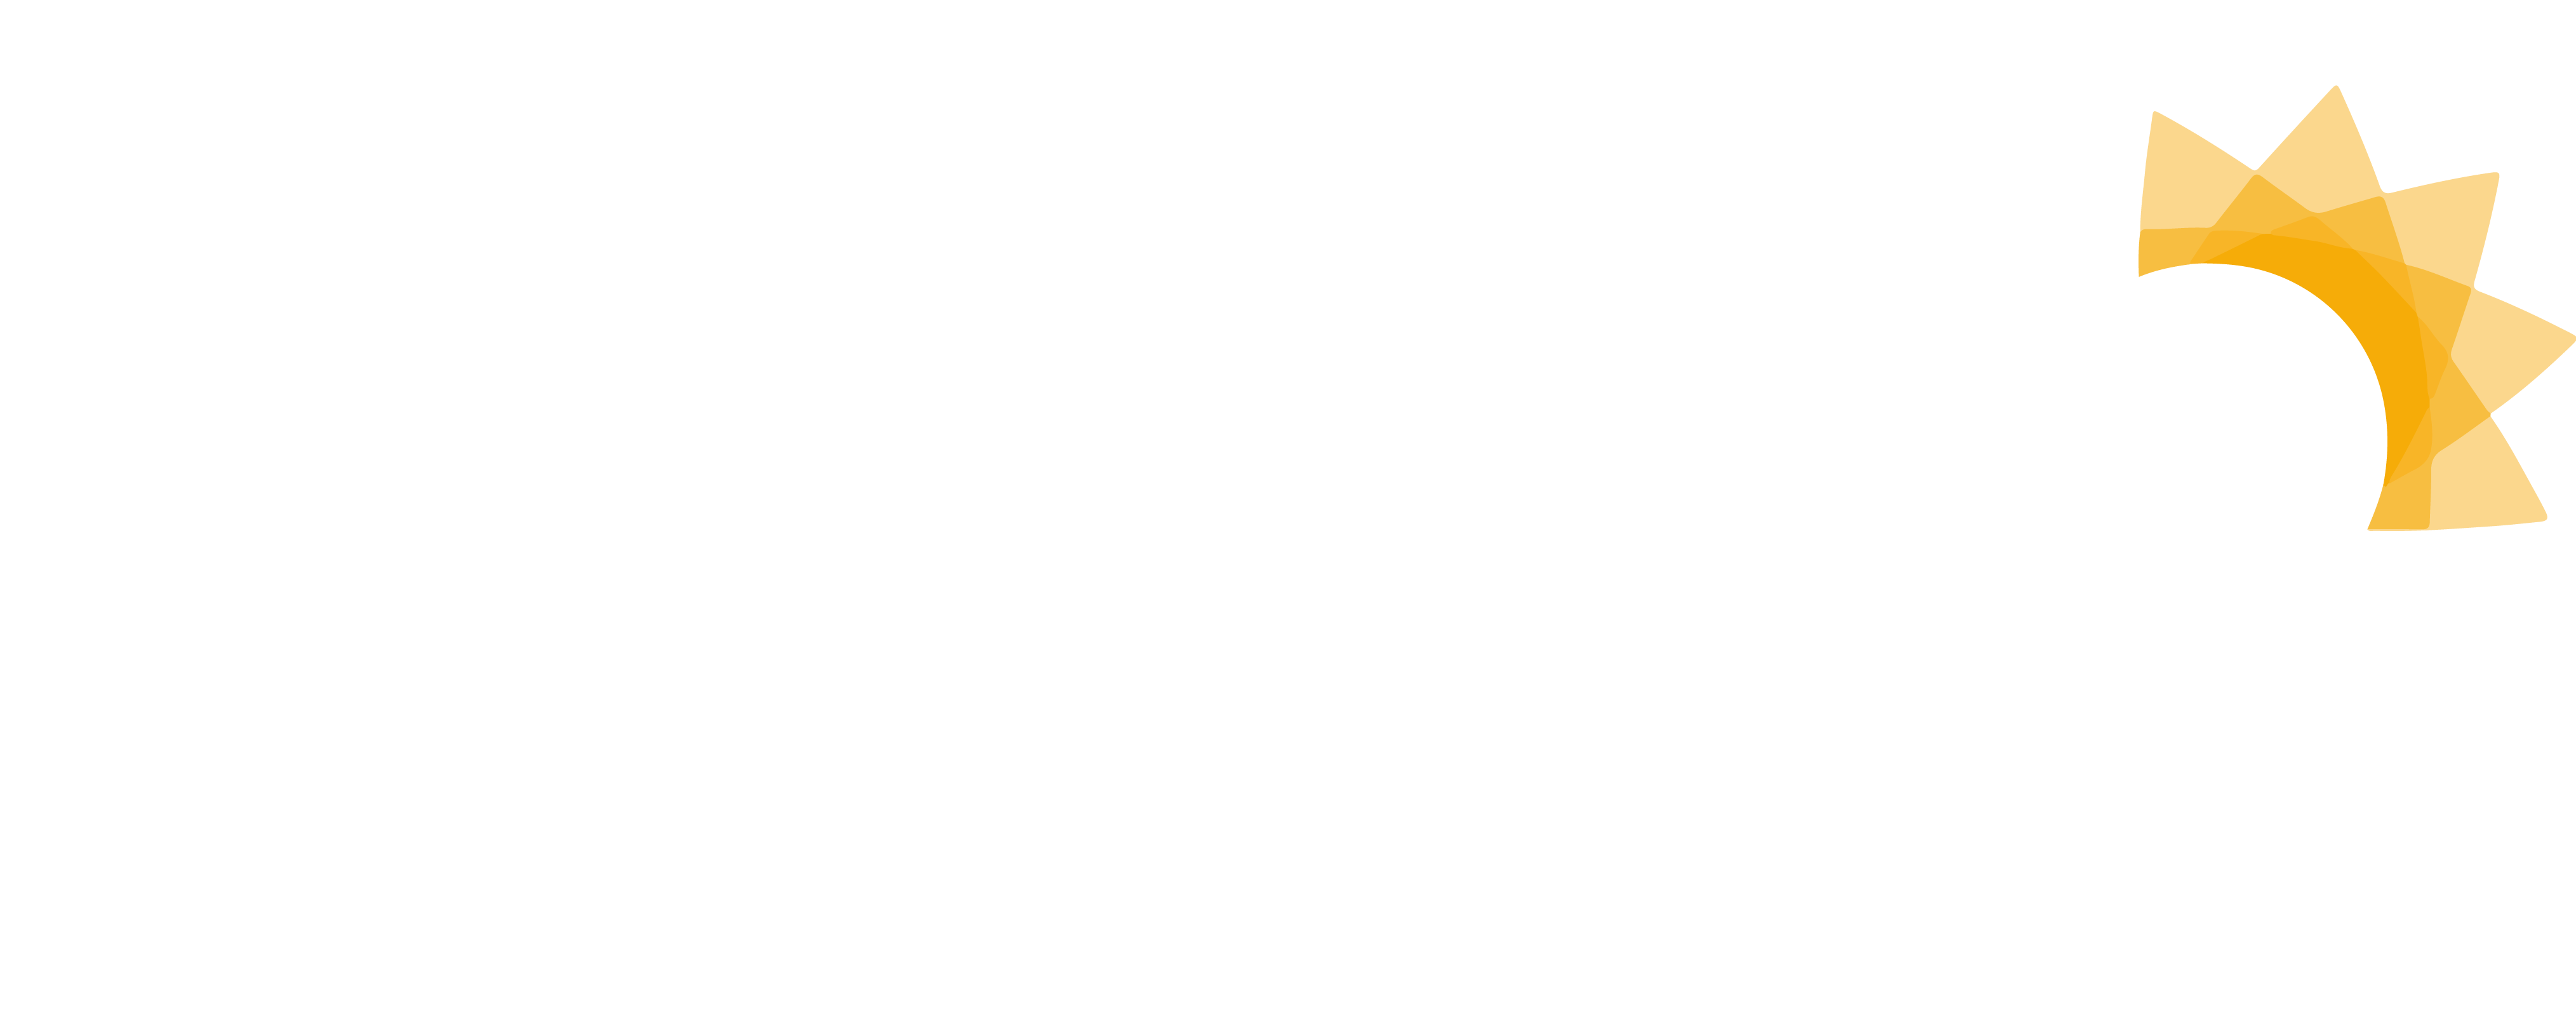 Aho Negro Brasil